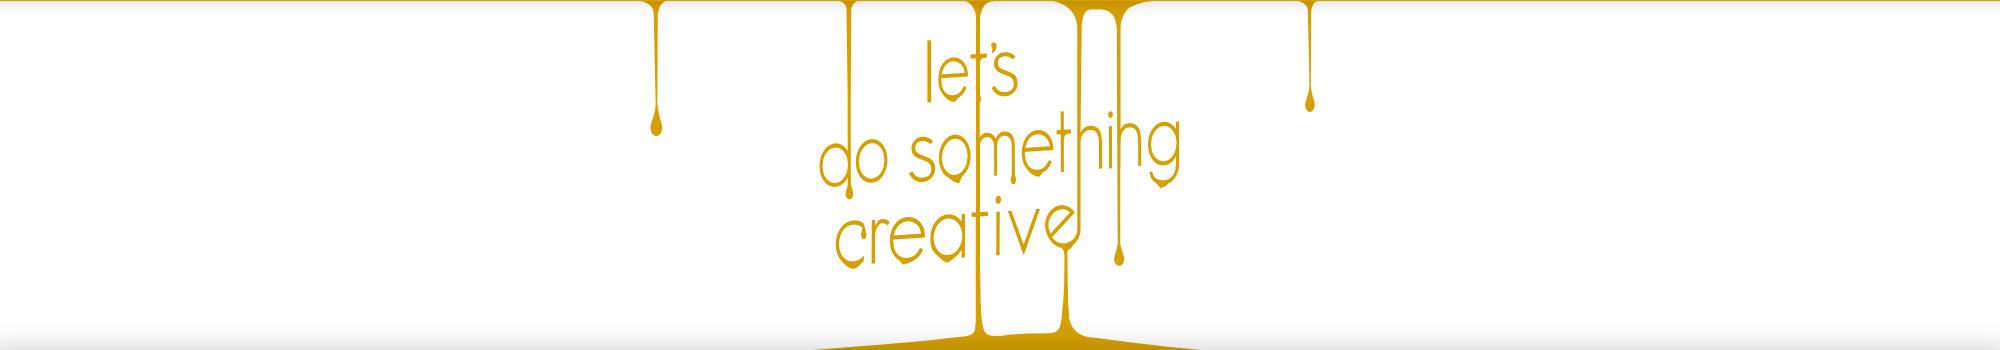 Grafikdesign - let's do something creative